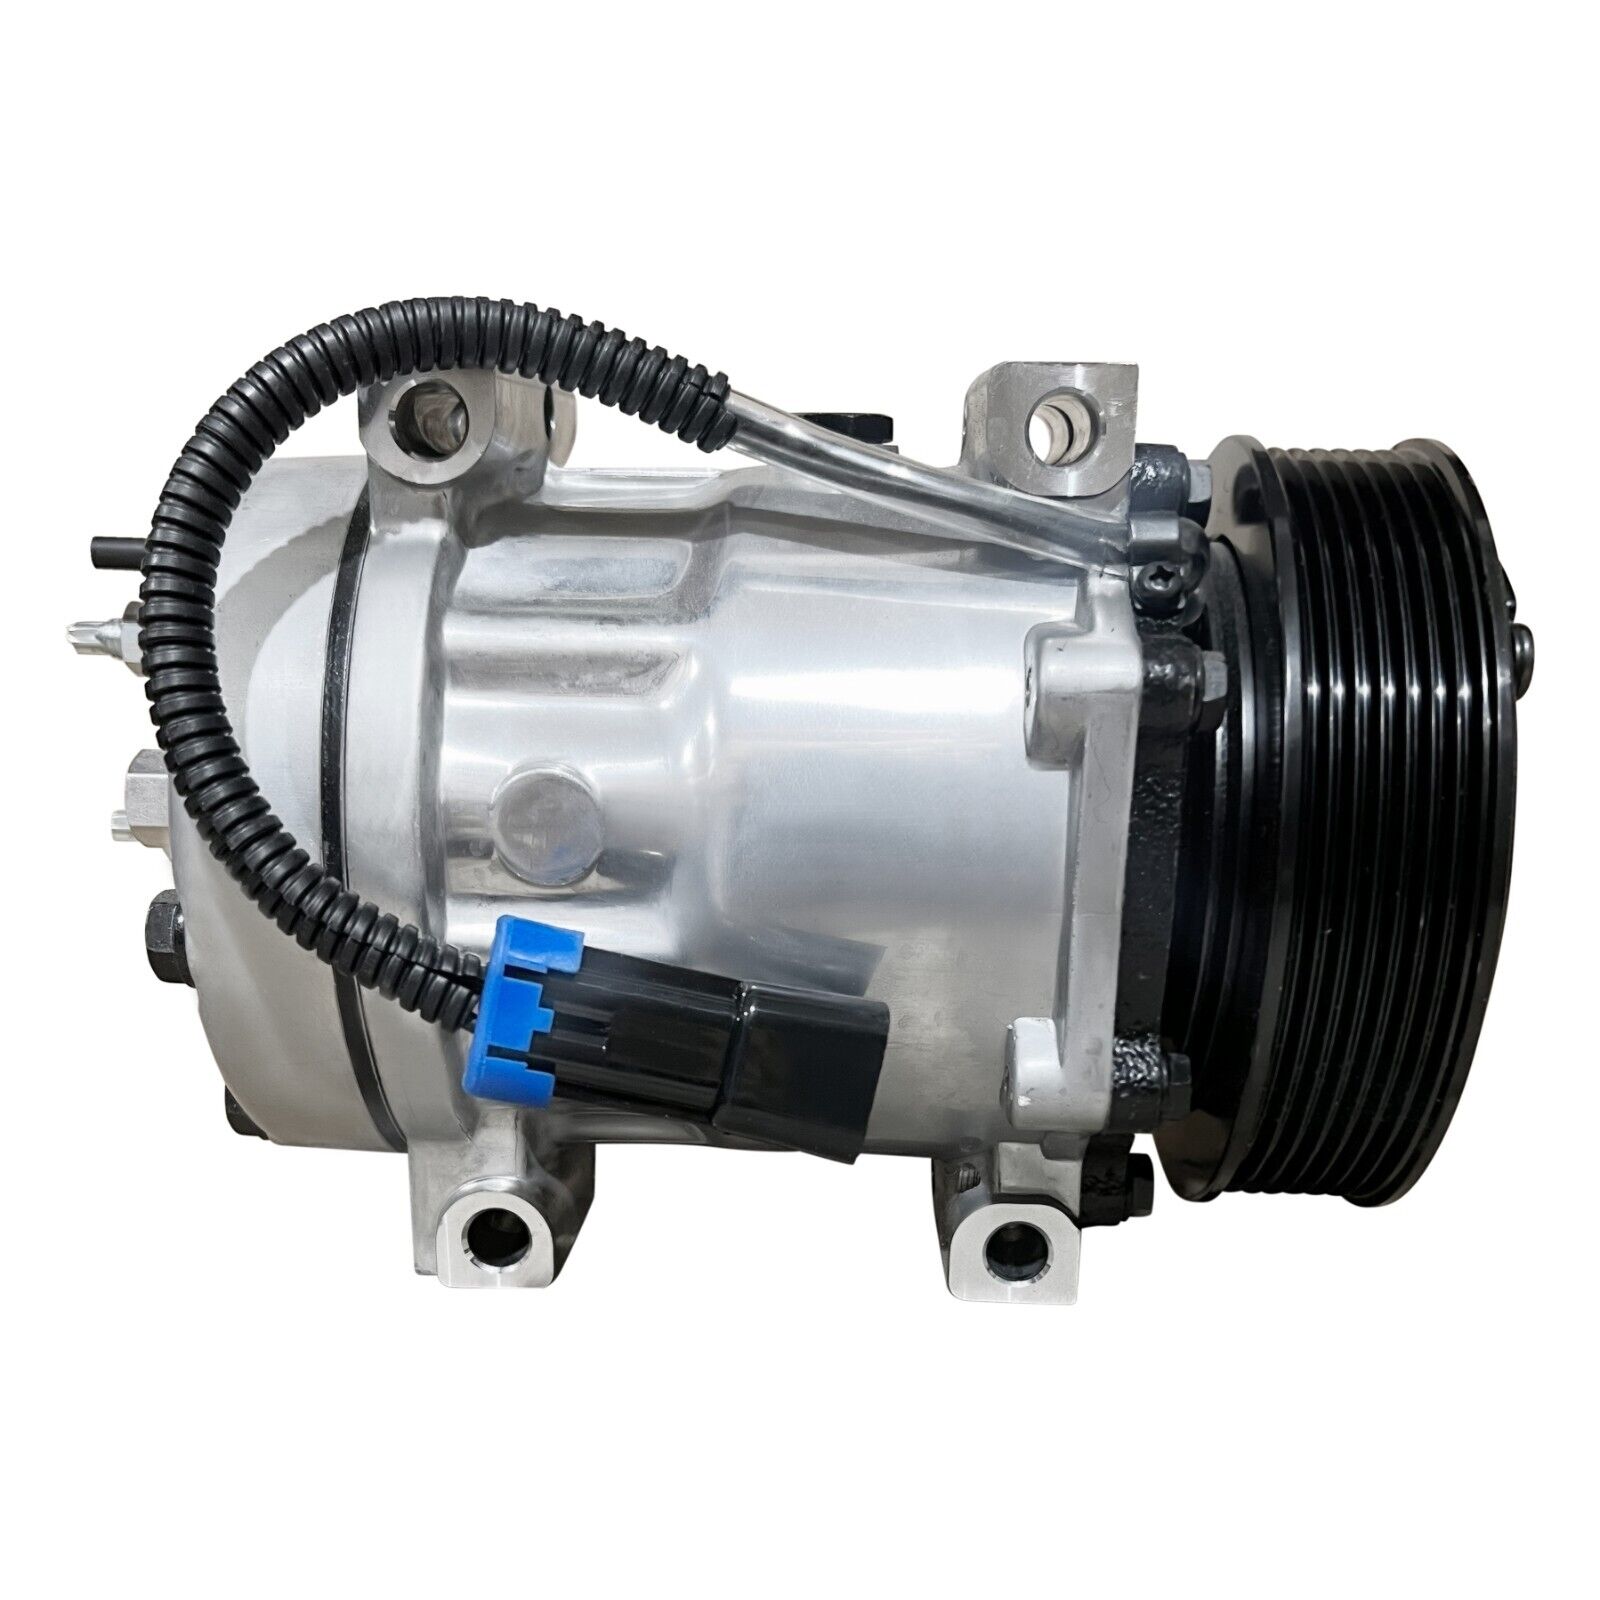 RYC New AC Compressor IH500 Fits Peterbilt 389, 579, 587 Replaces F691015111